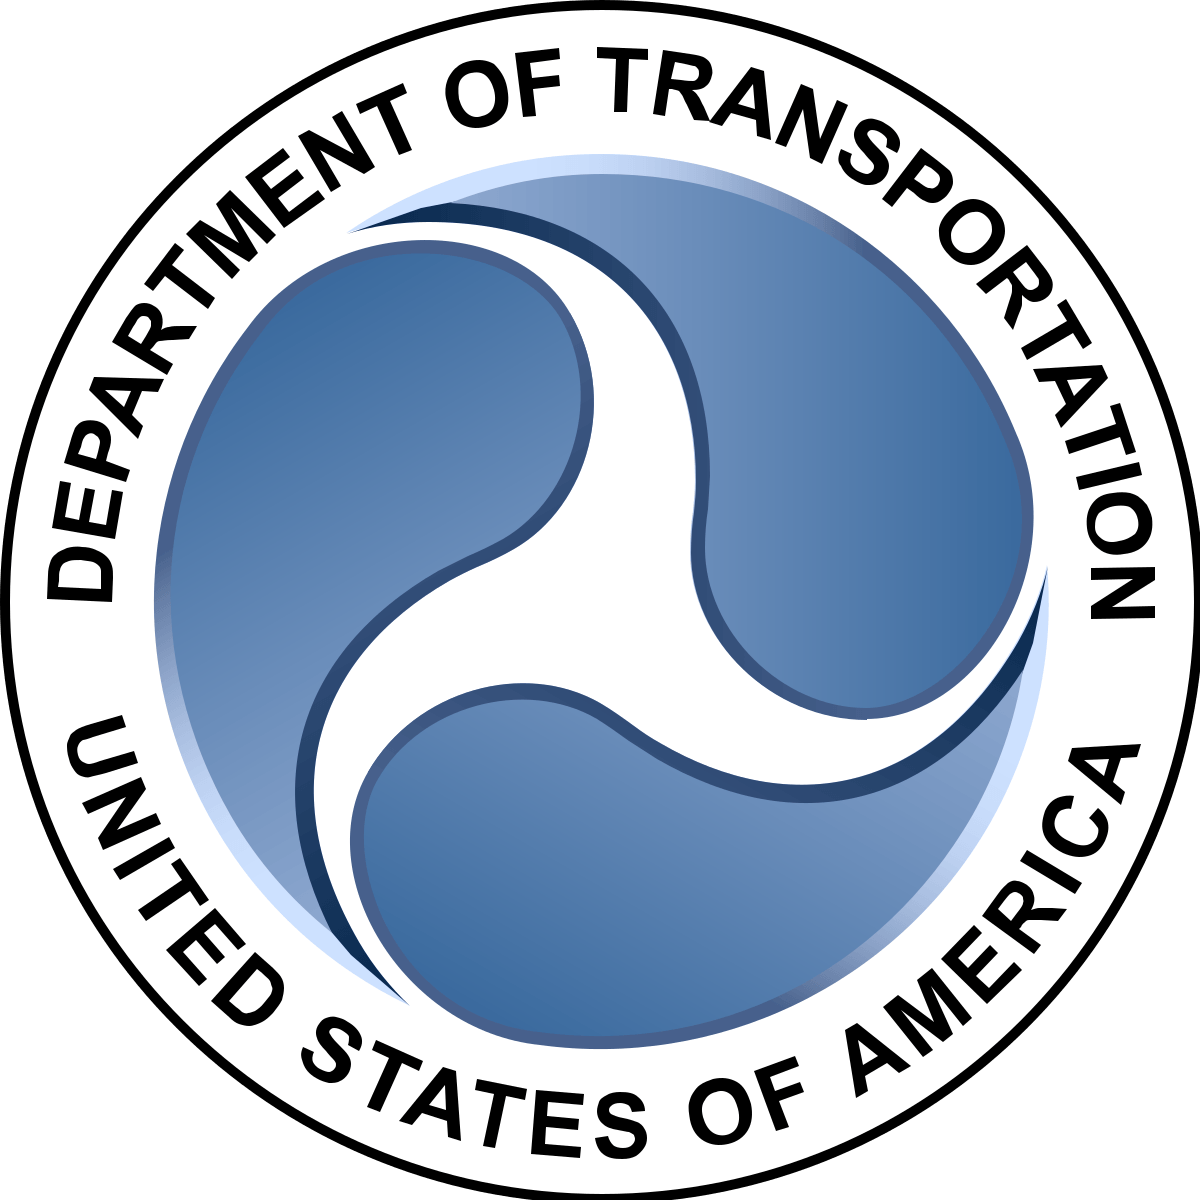 Illinois Dot Logo - United States Department of Transportation